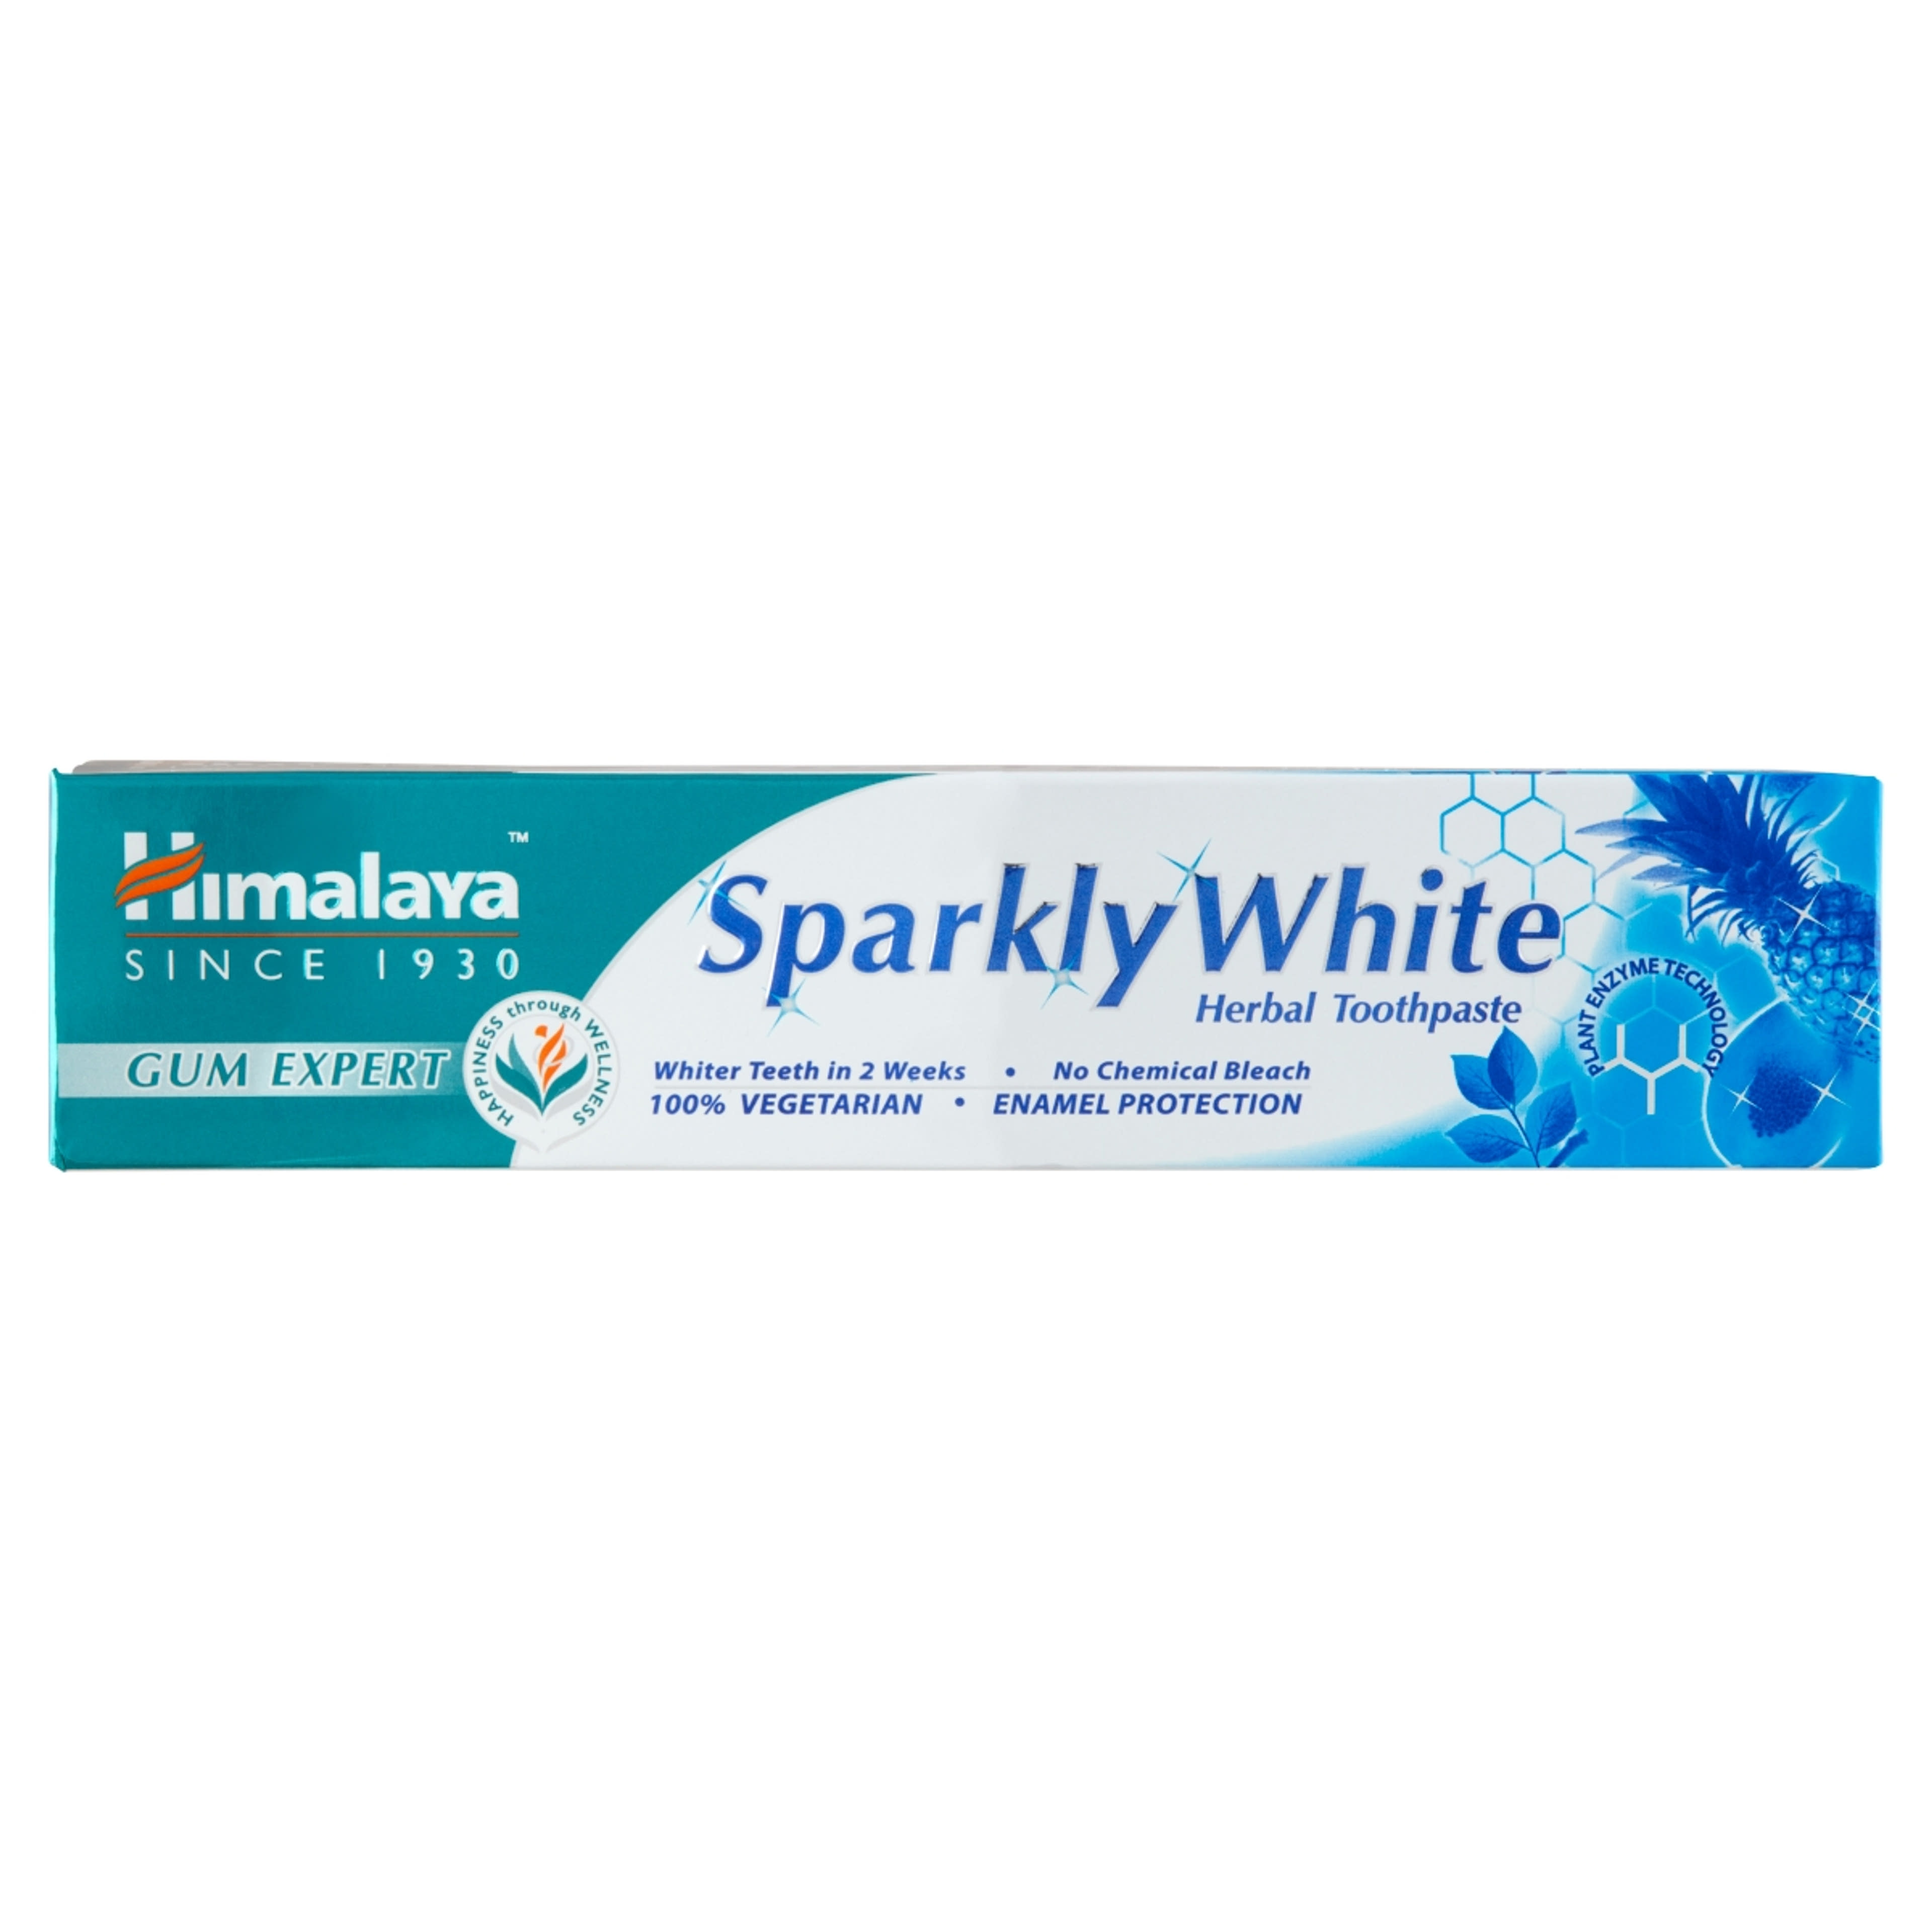 Himalaya Gum Expert Sparkly White fogkrém - 75 ml